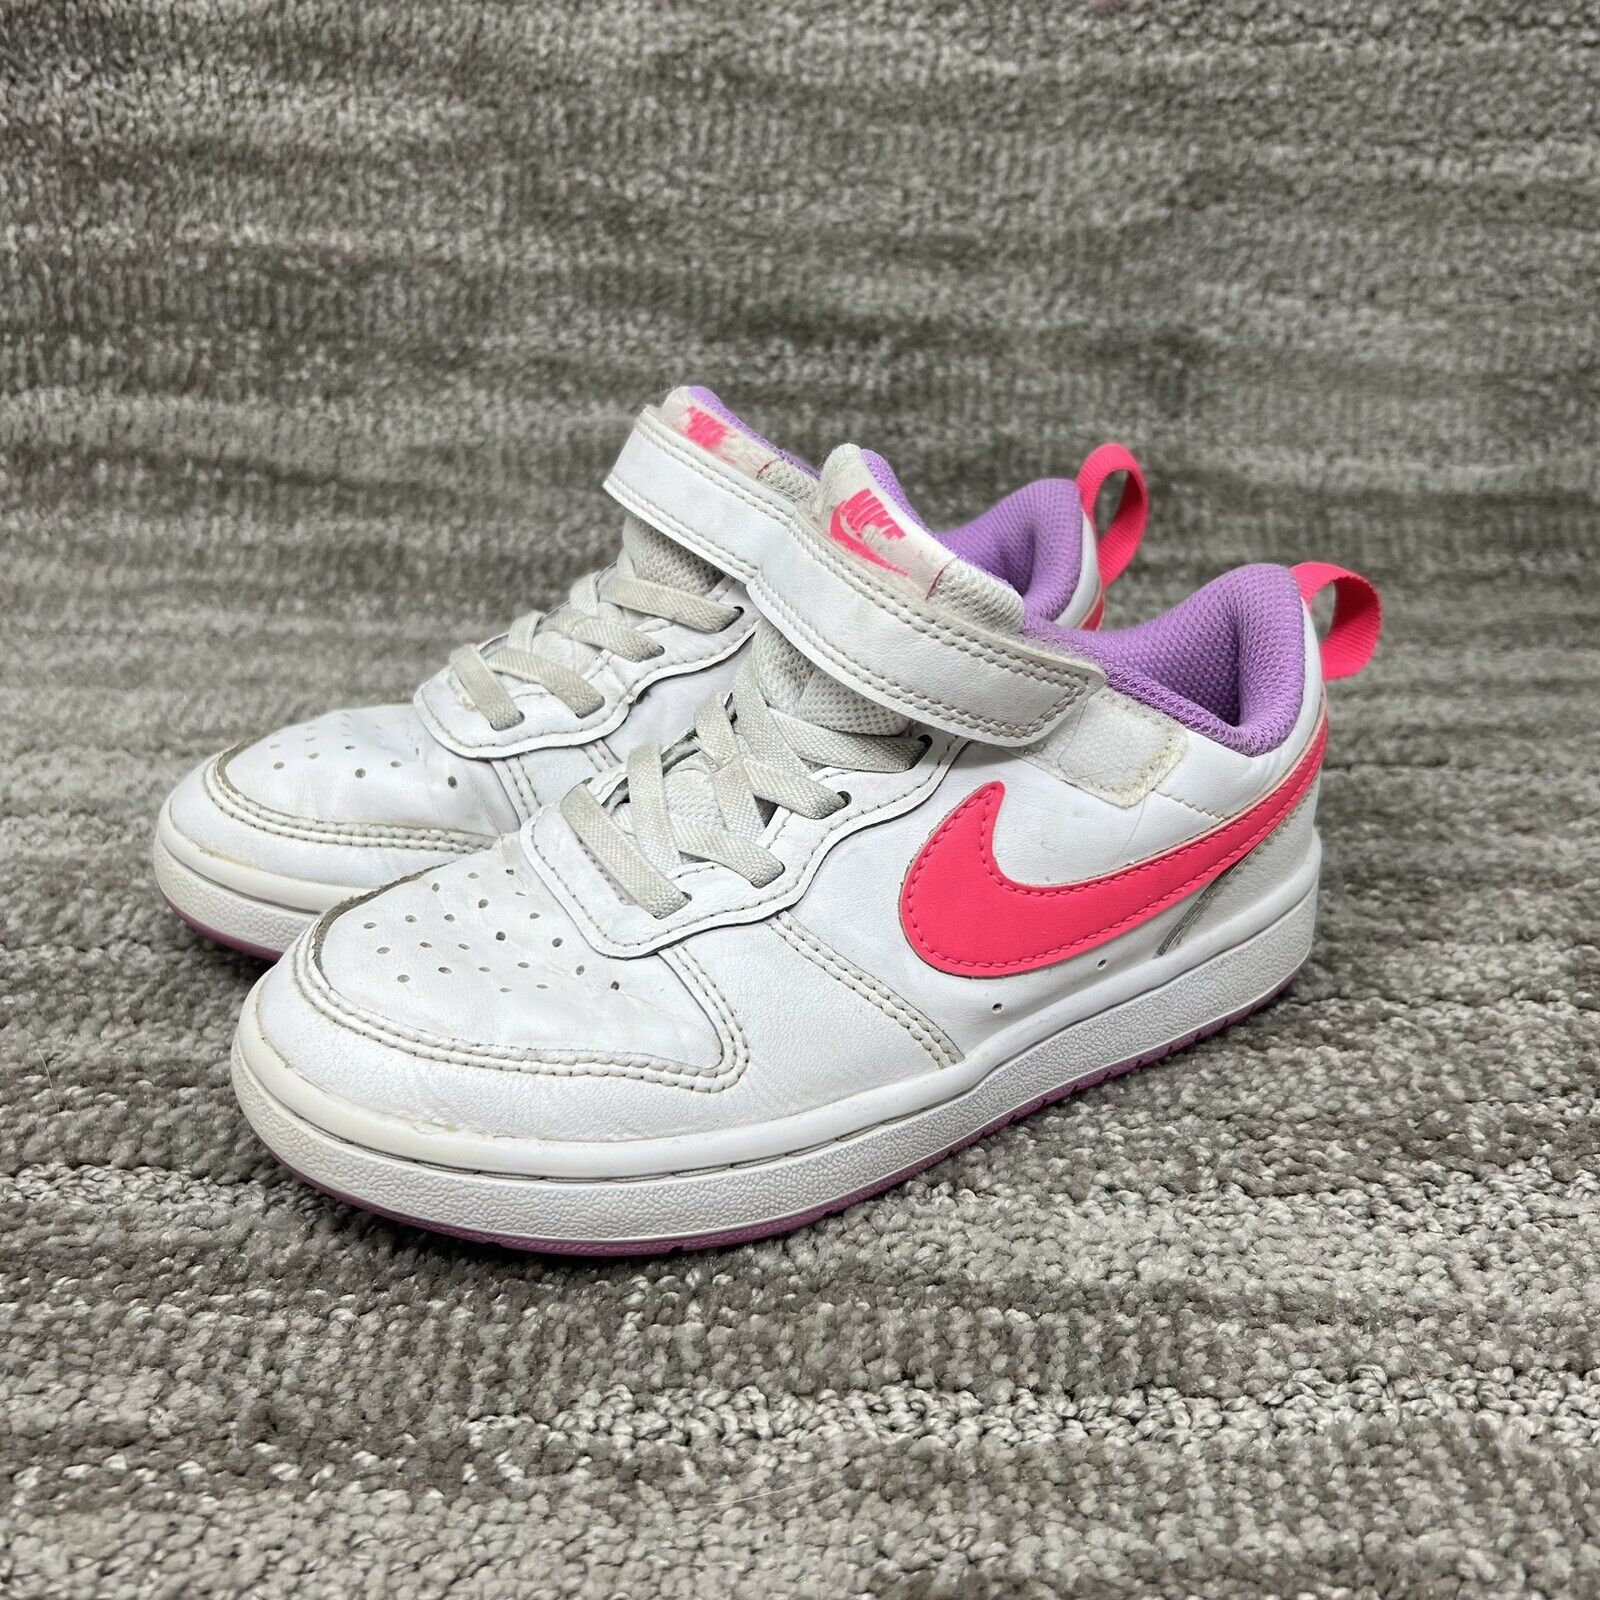 Nike Court Borough Low 2 Girls Size 13 C White Pink Shoes BQ5451-111 Sneaker |